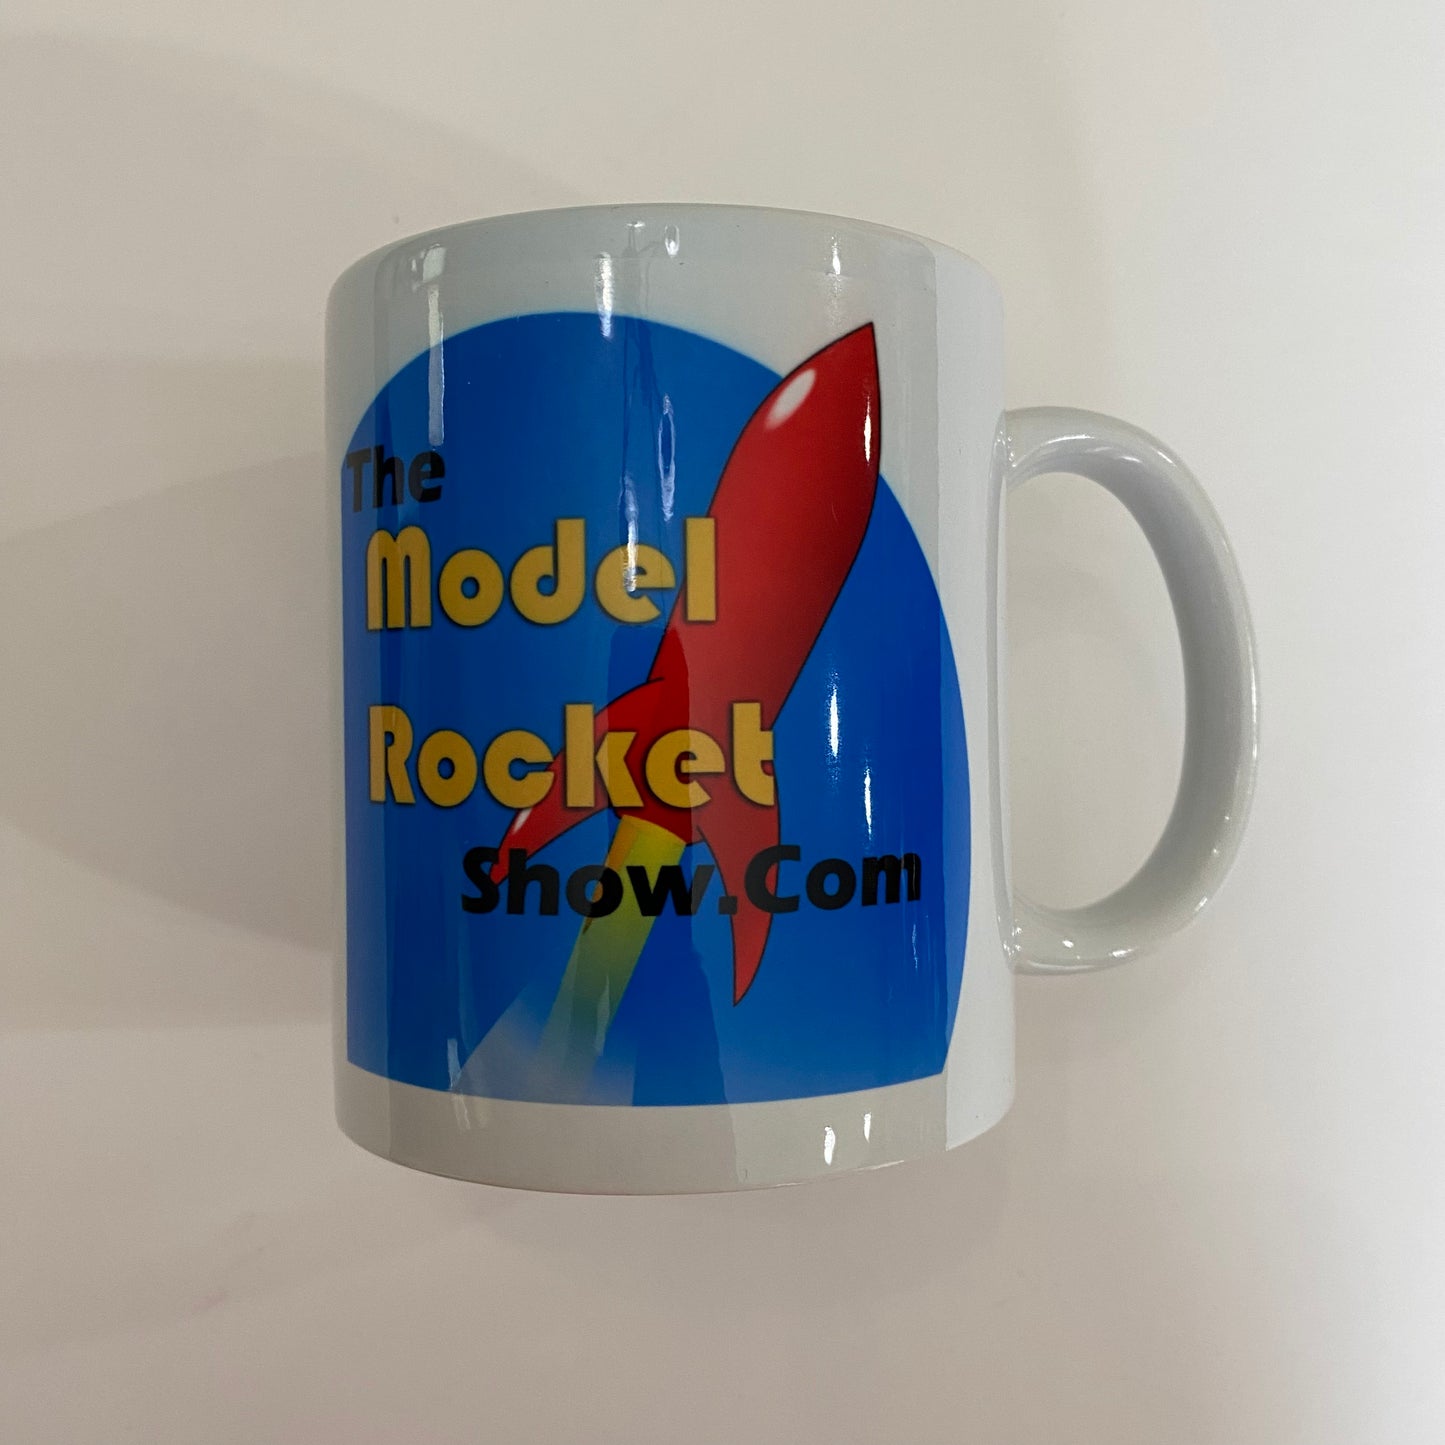 Coffee Mug - The Rocketry Show / The Model Rocket Show Combo